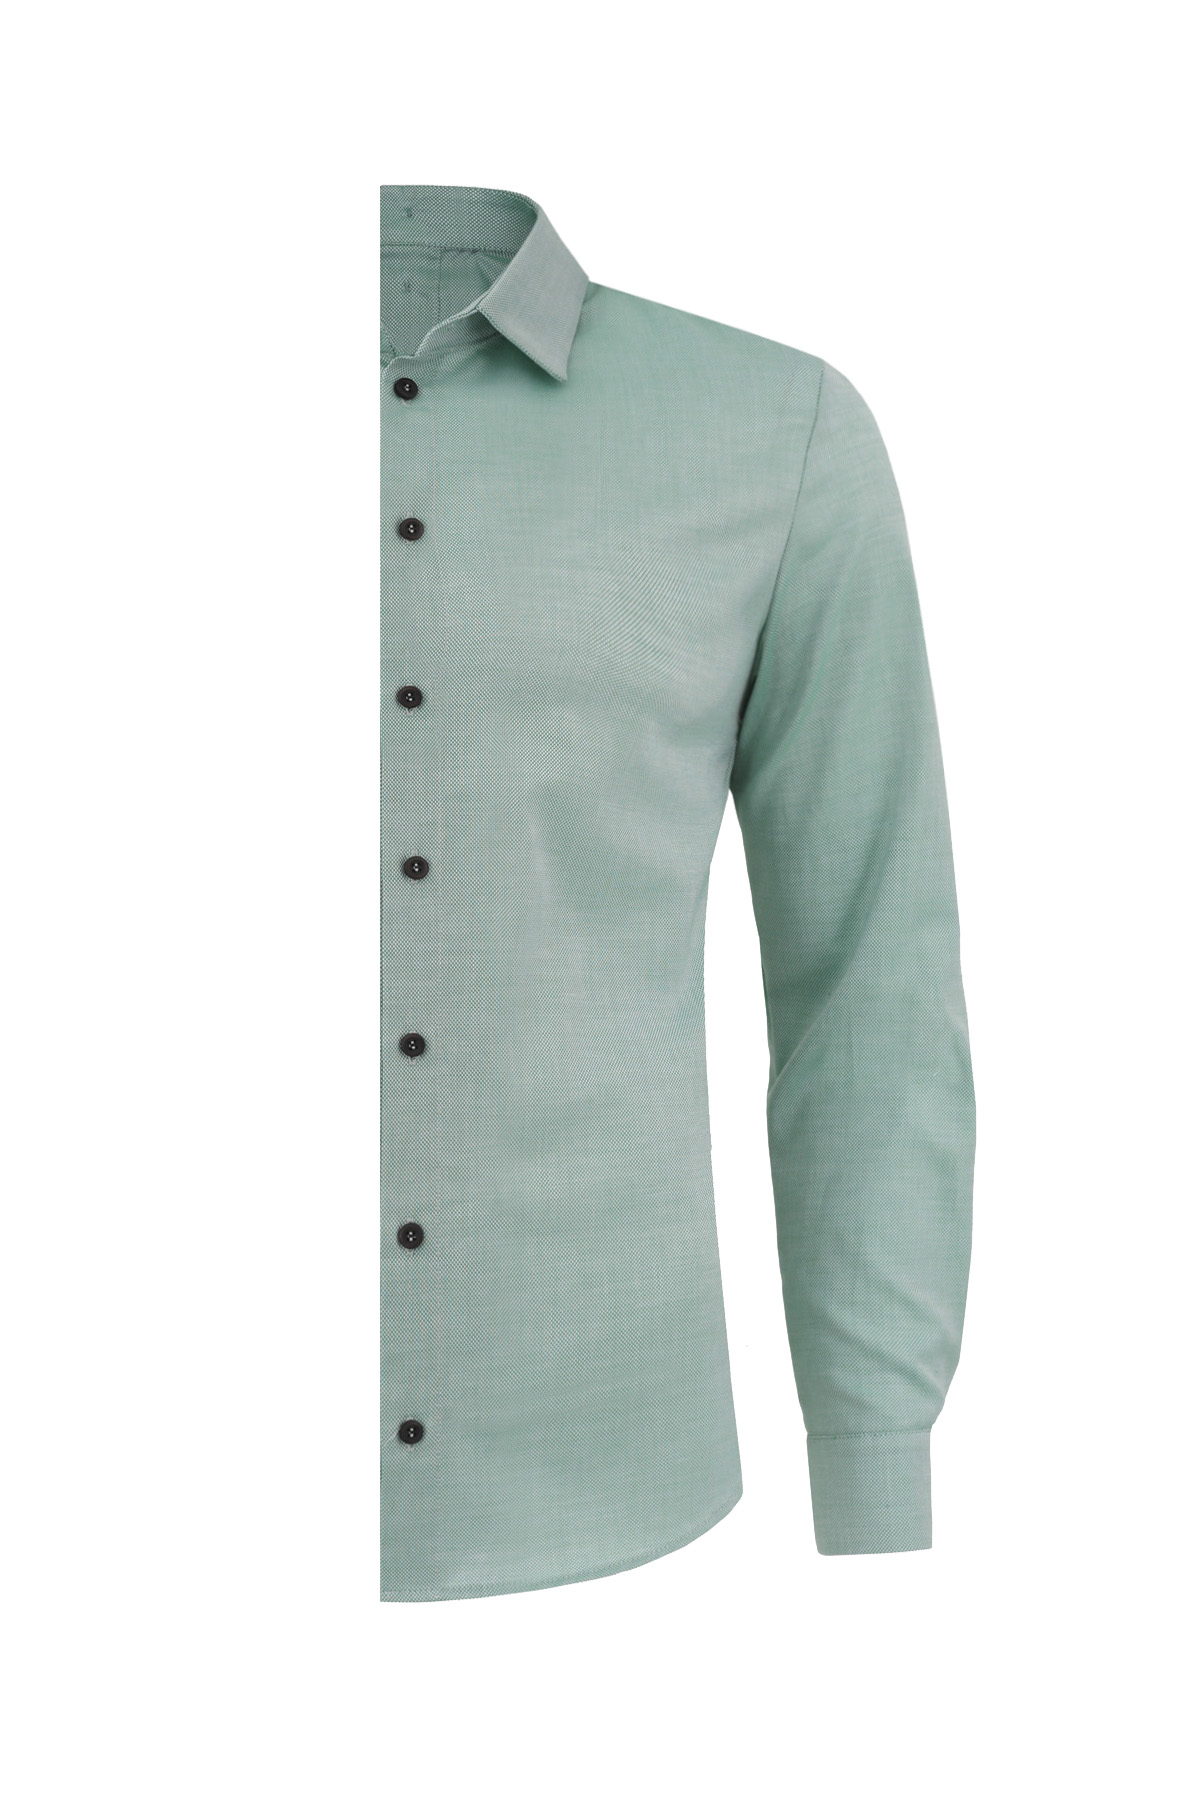 green slim fit shirt – left